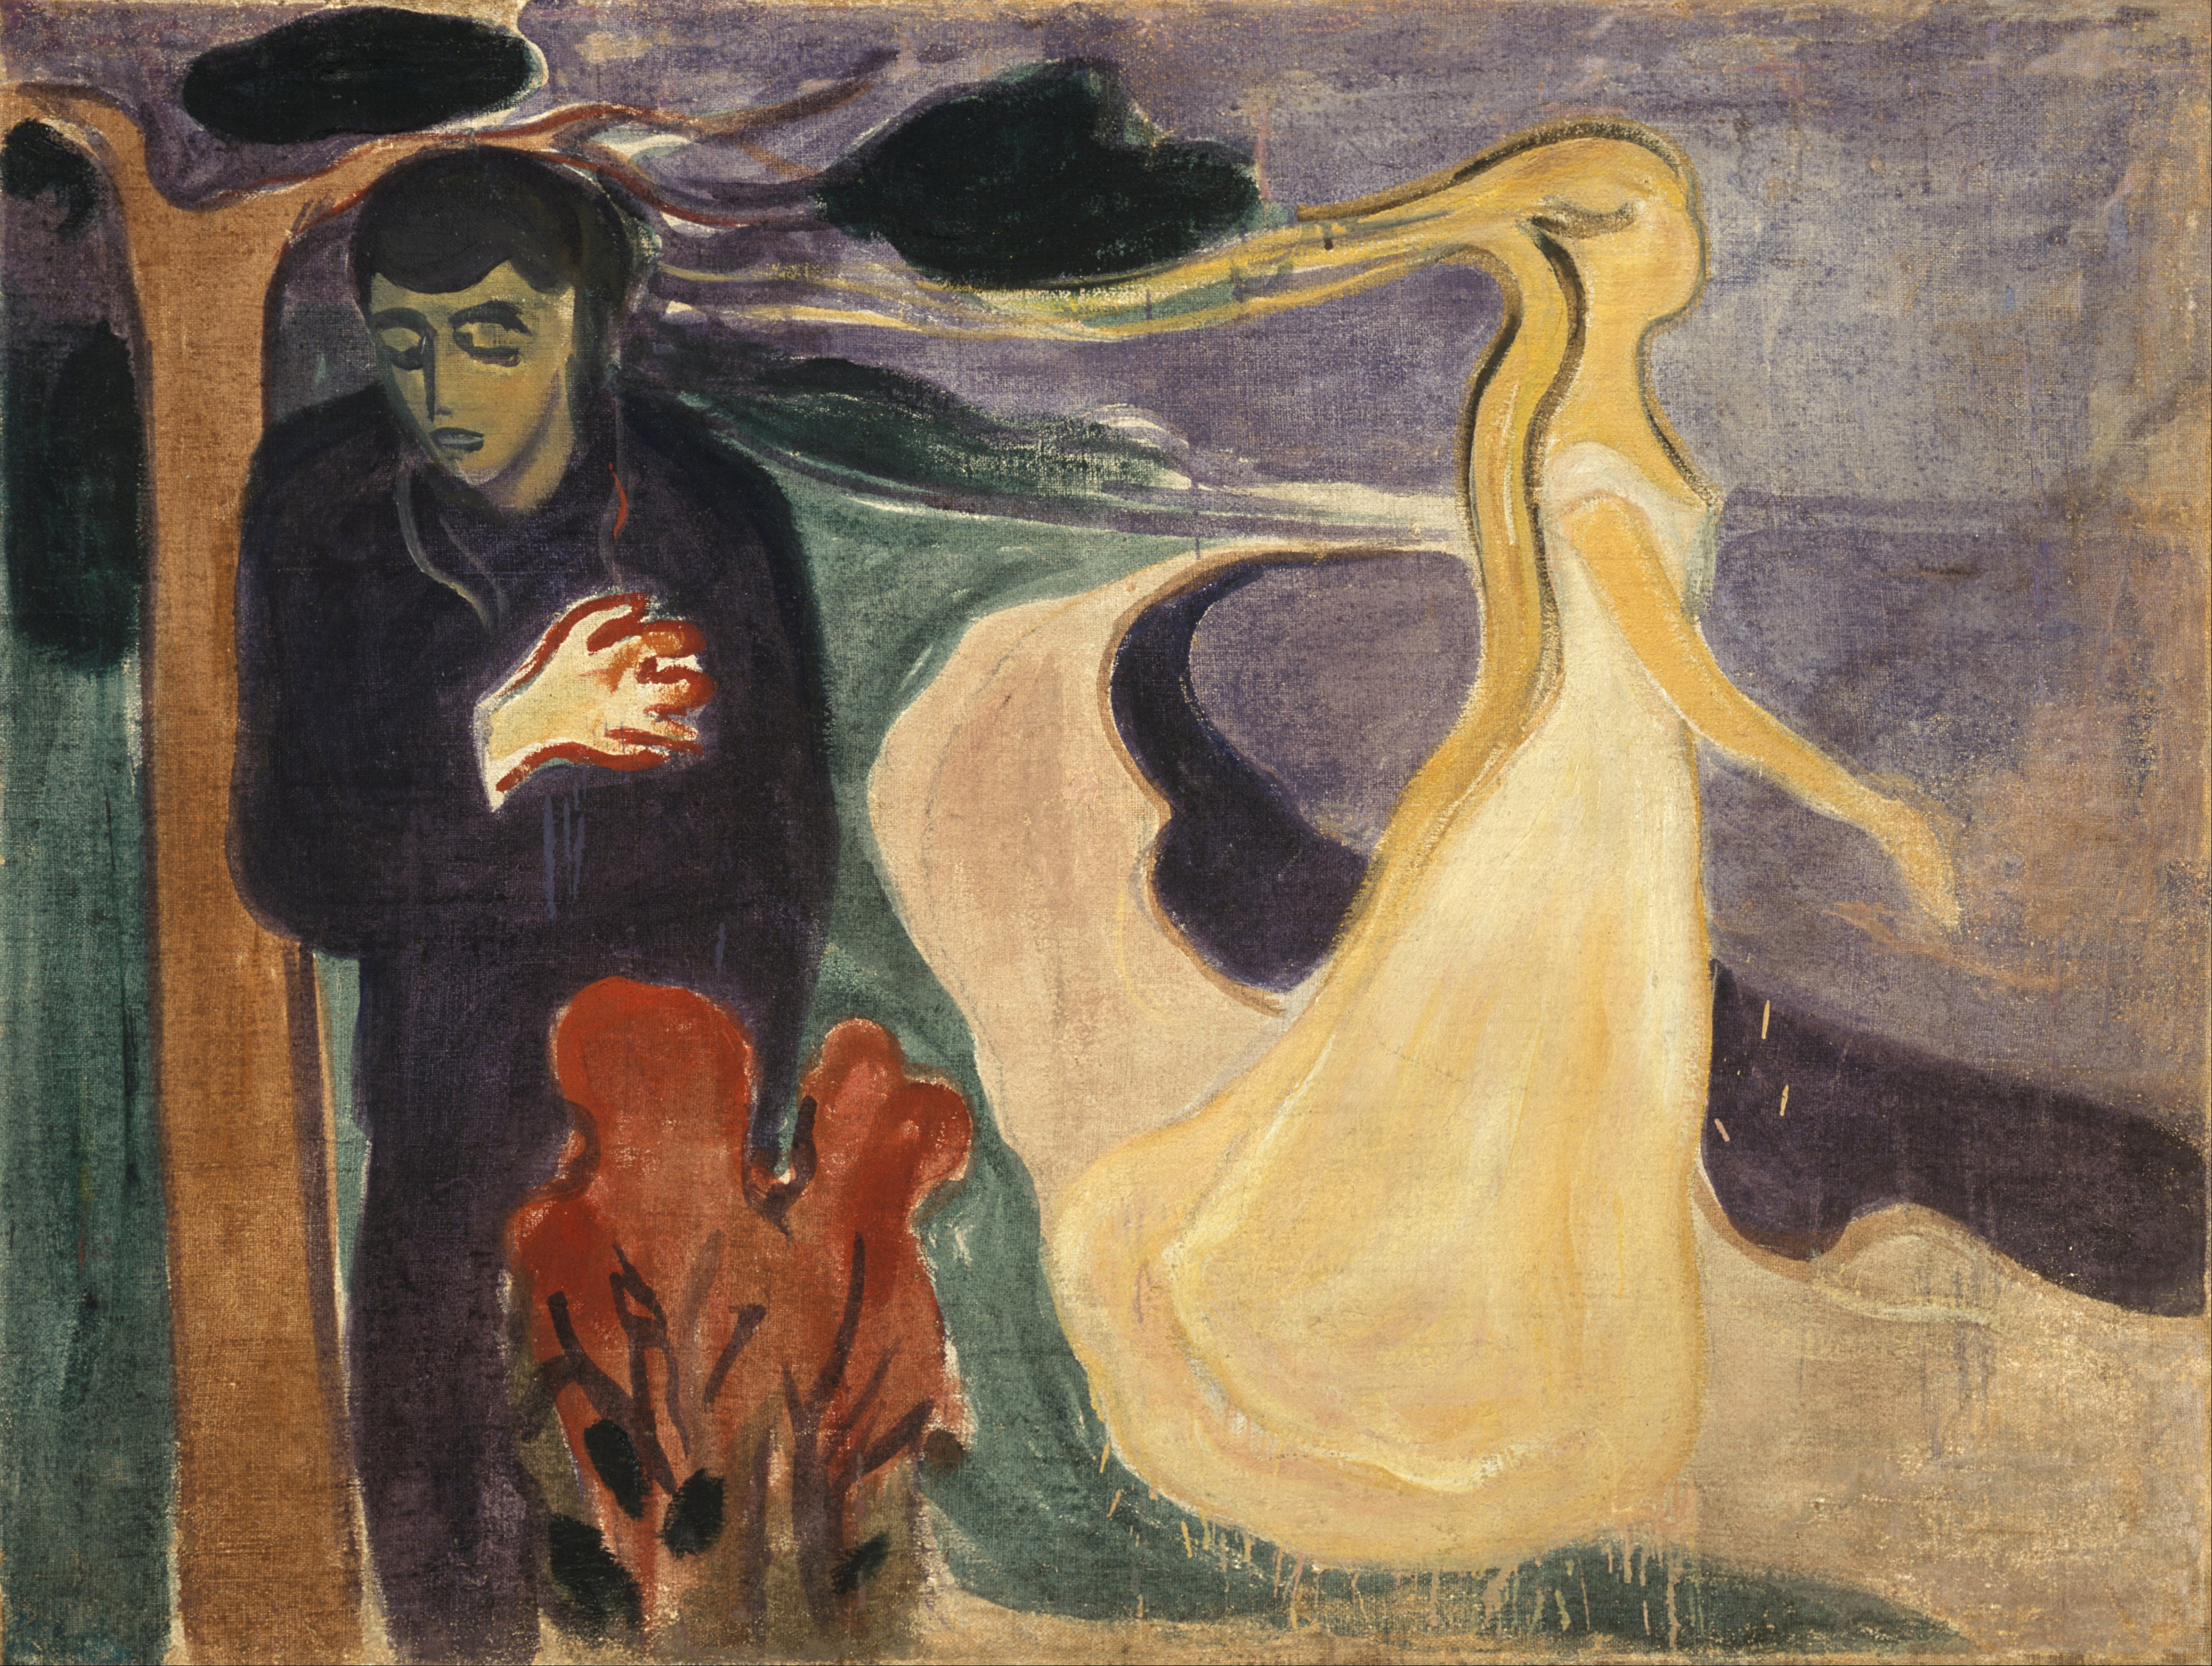 Despărțire by Edvard Munch - 1896 - 96 × 127 cm 